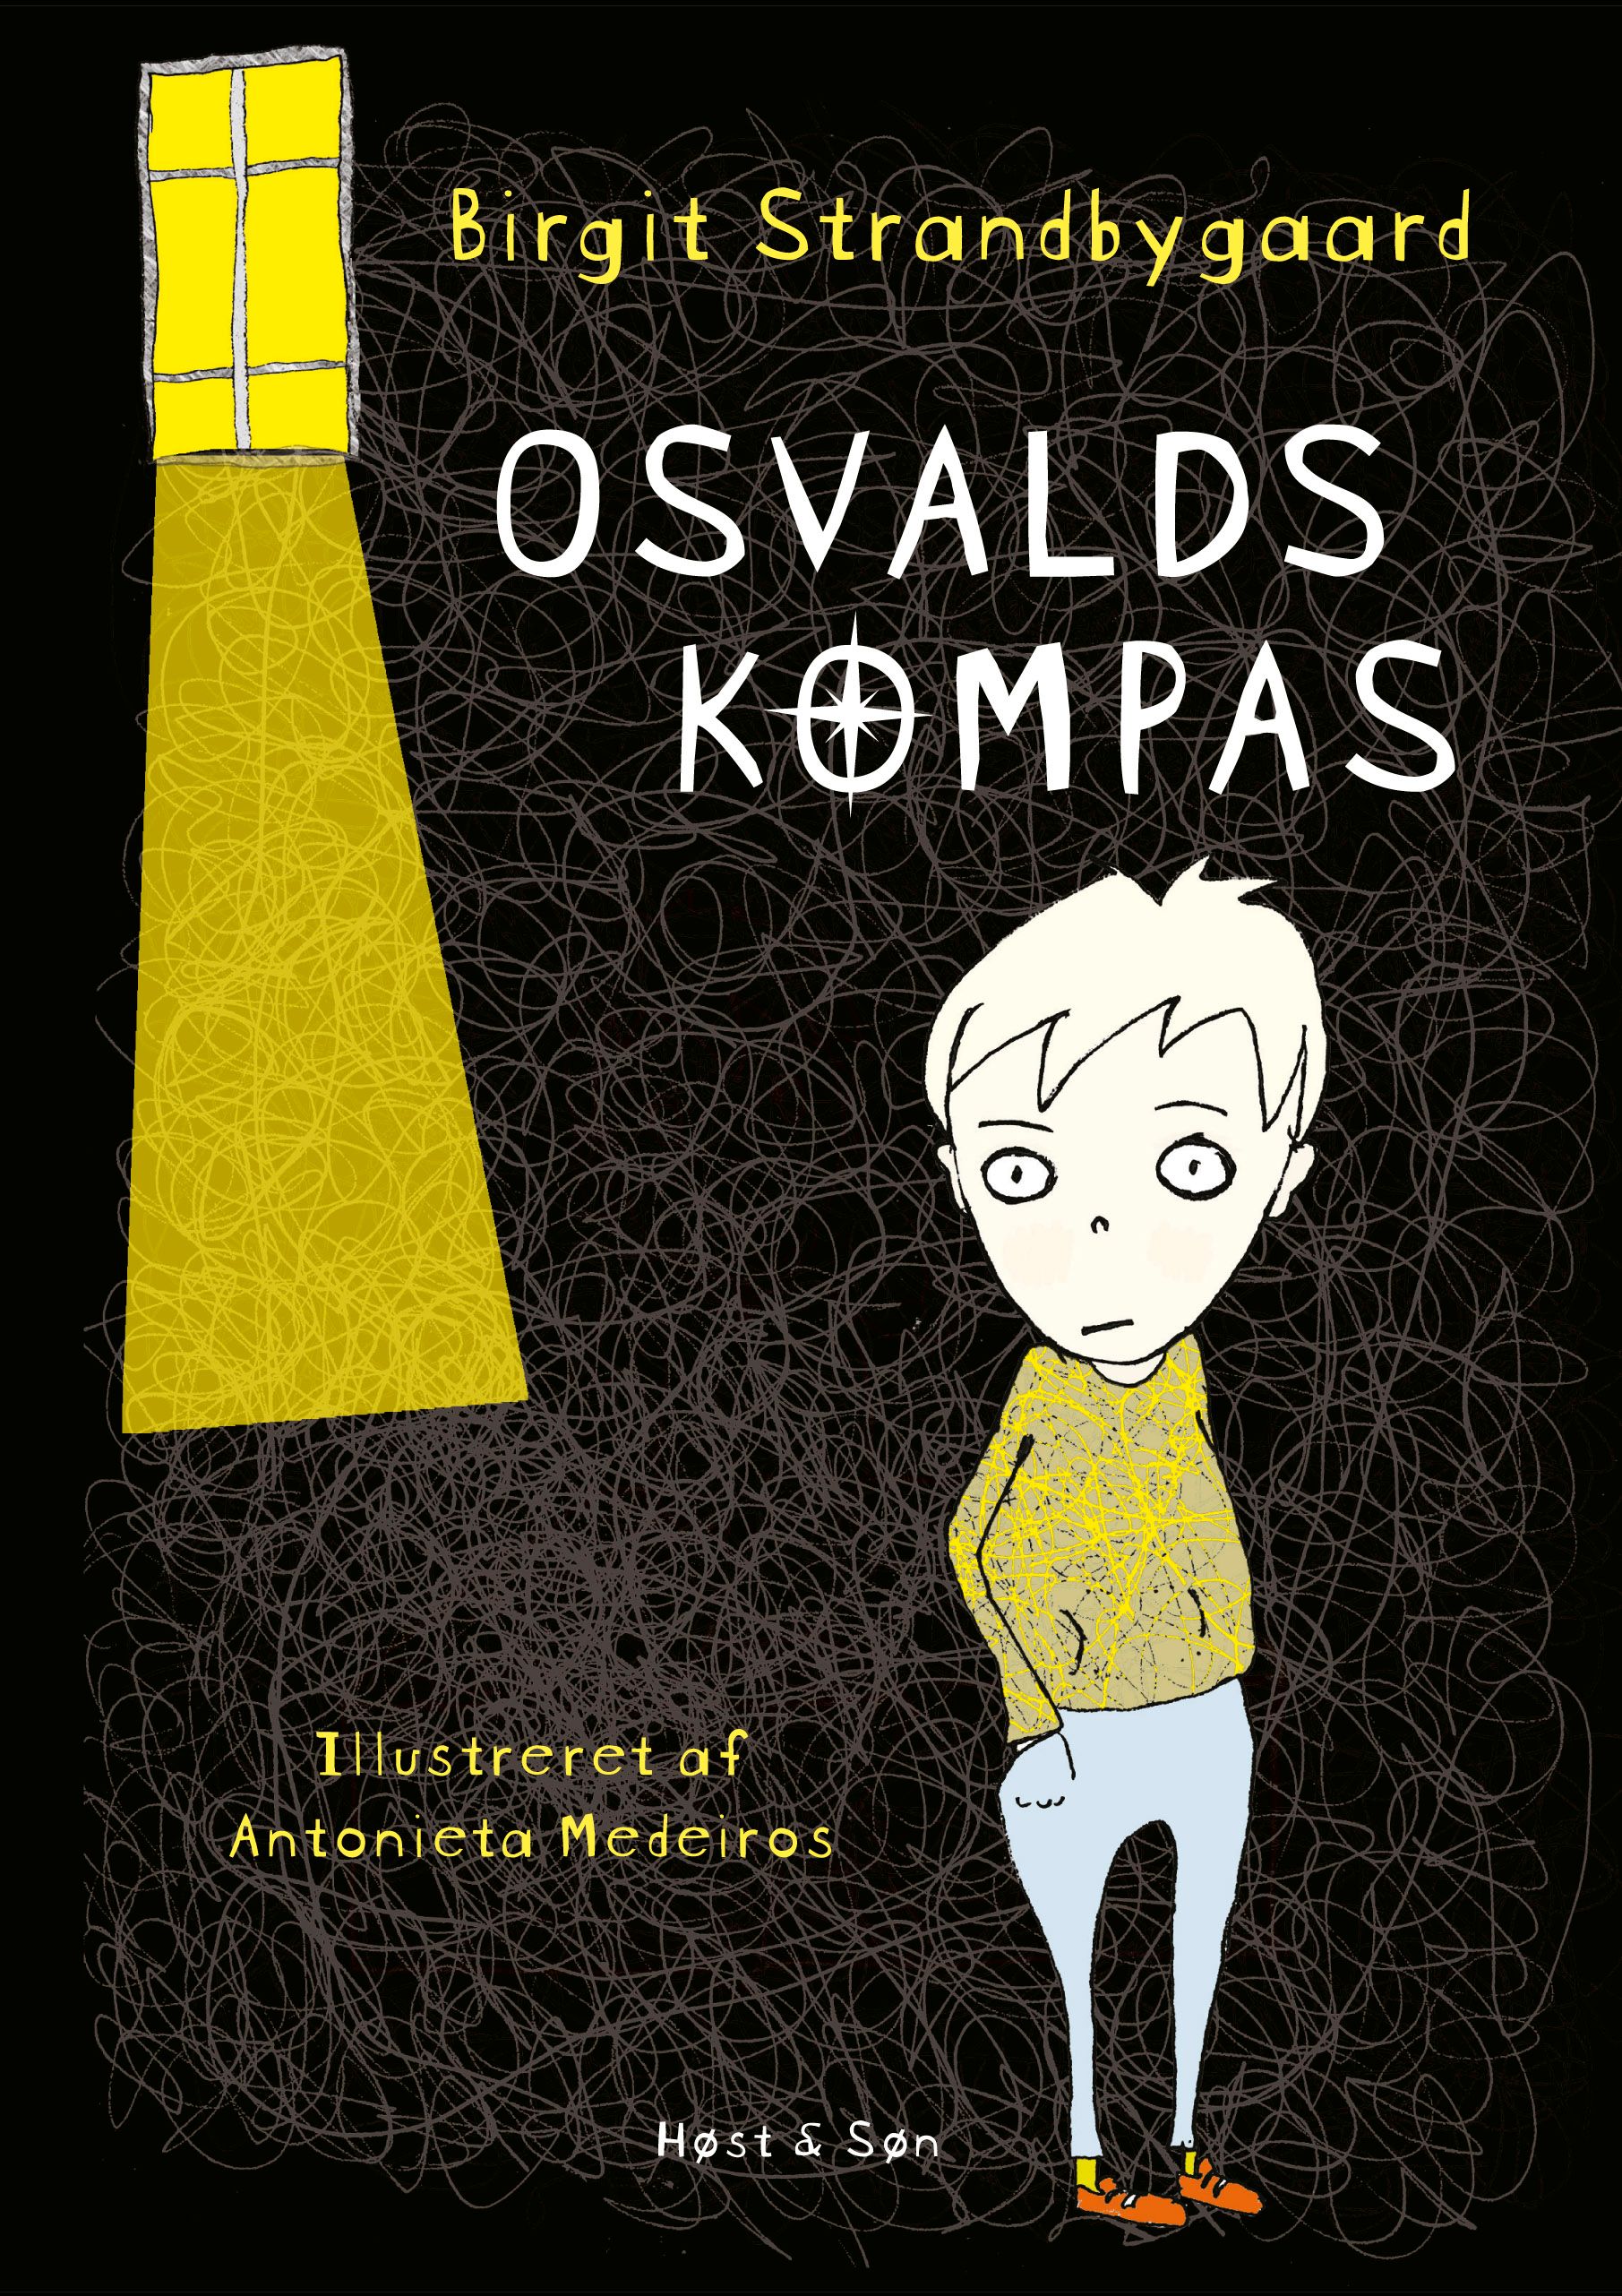 Osvalds kompas, eBook by Birgit Strandbygaard